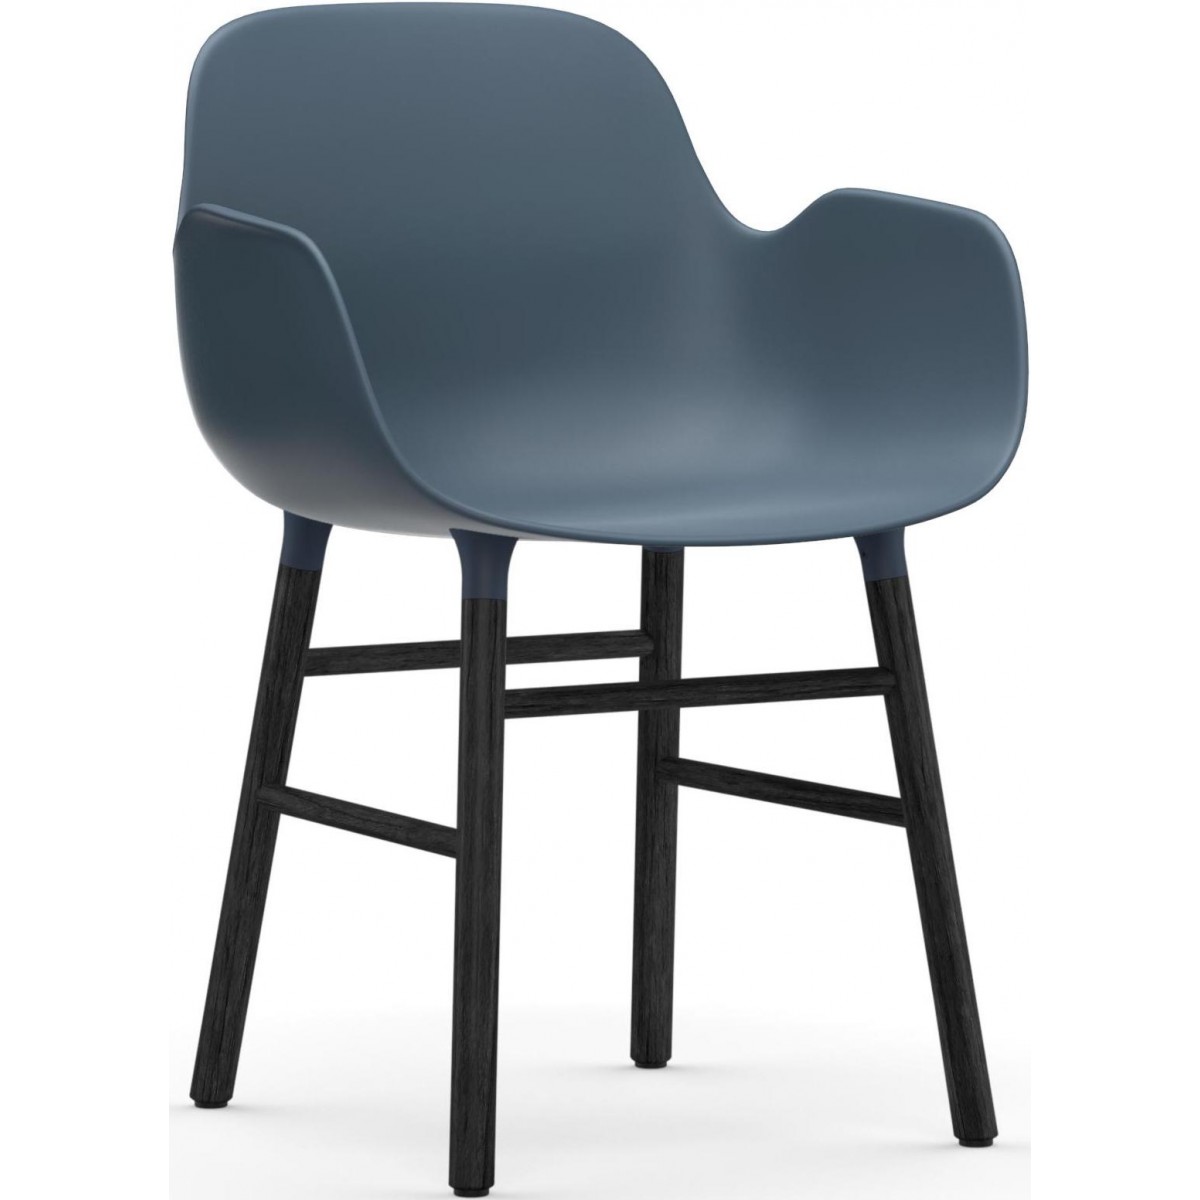 Bleu / Chêne peint en noir – Chaise Form avec accoudoirs